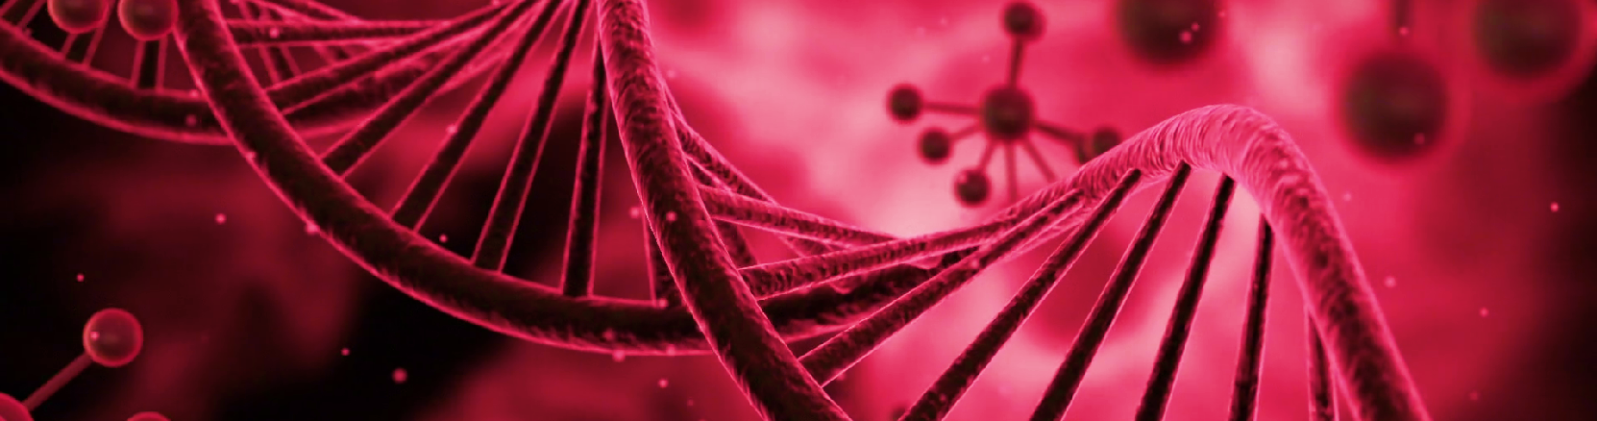 Biomedical Science Human Biology DNA Cells 1600